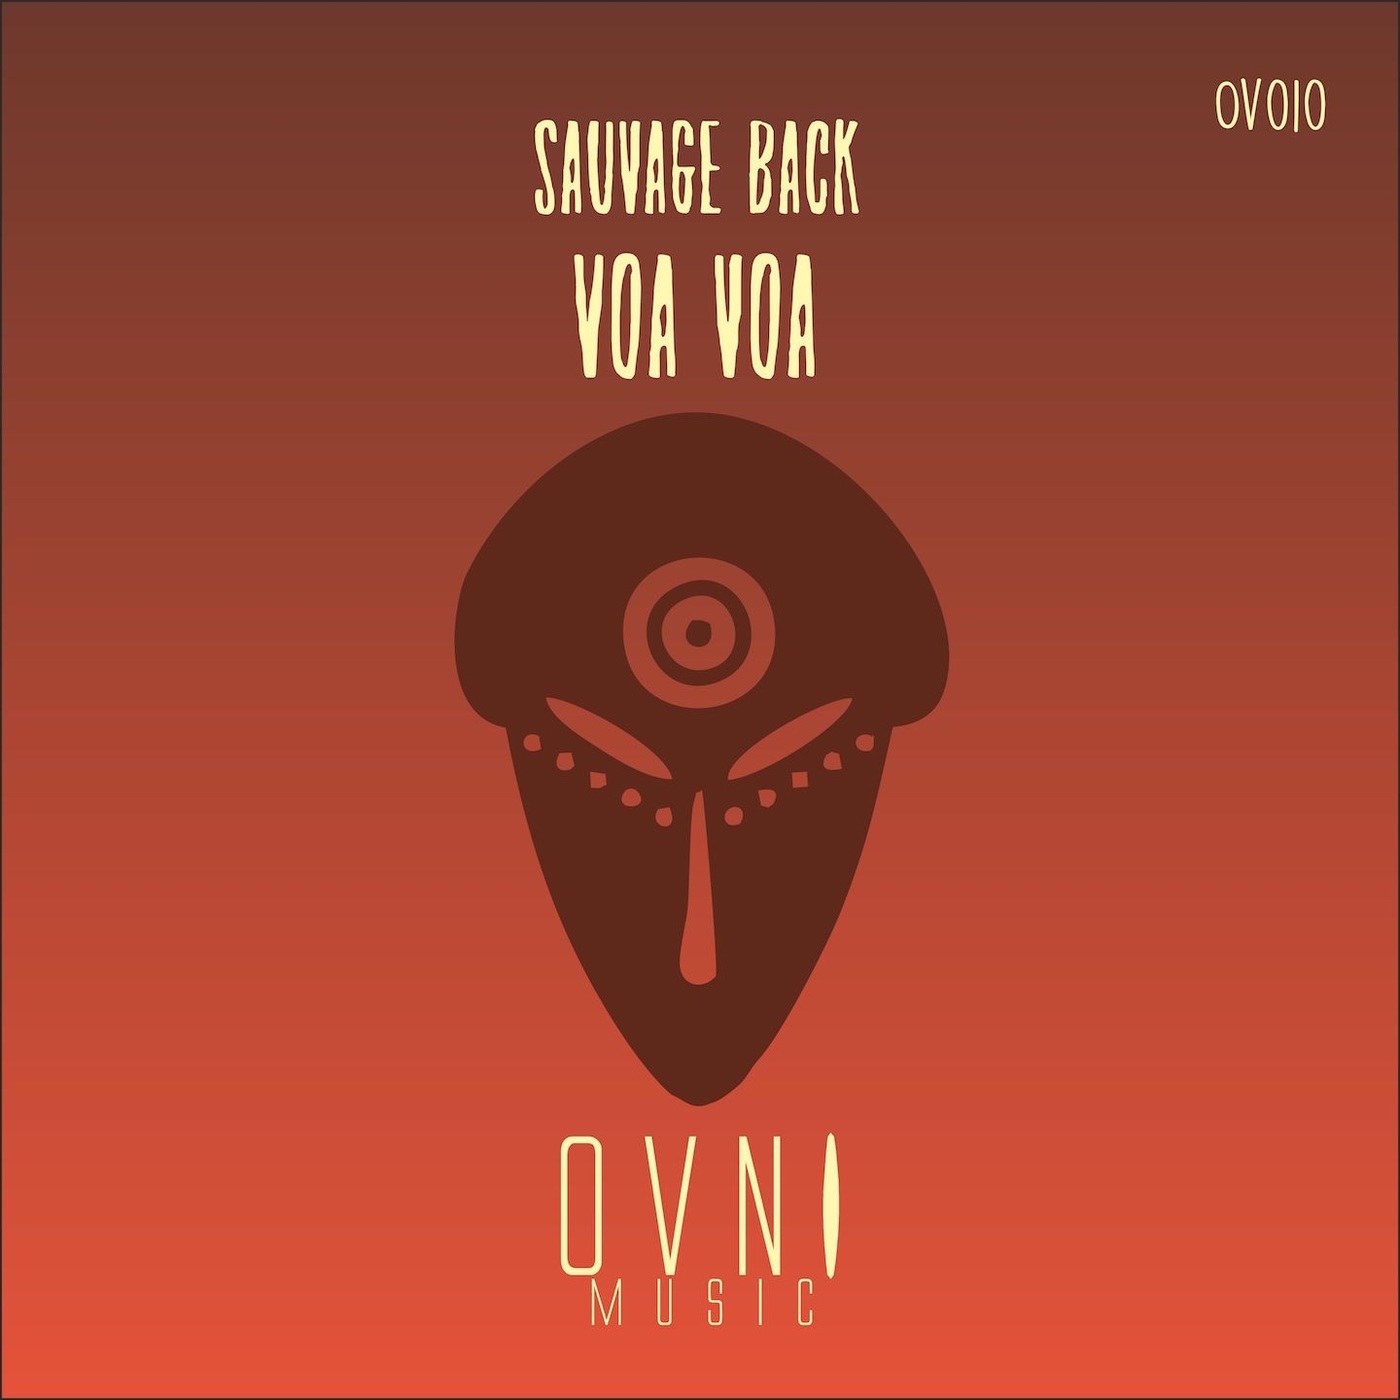 Sauvage back - Voa Voa / Ovni Music